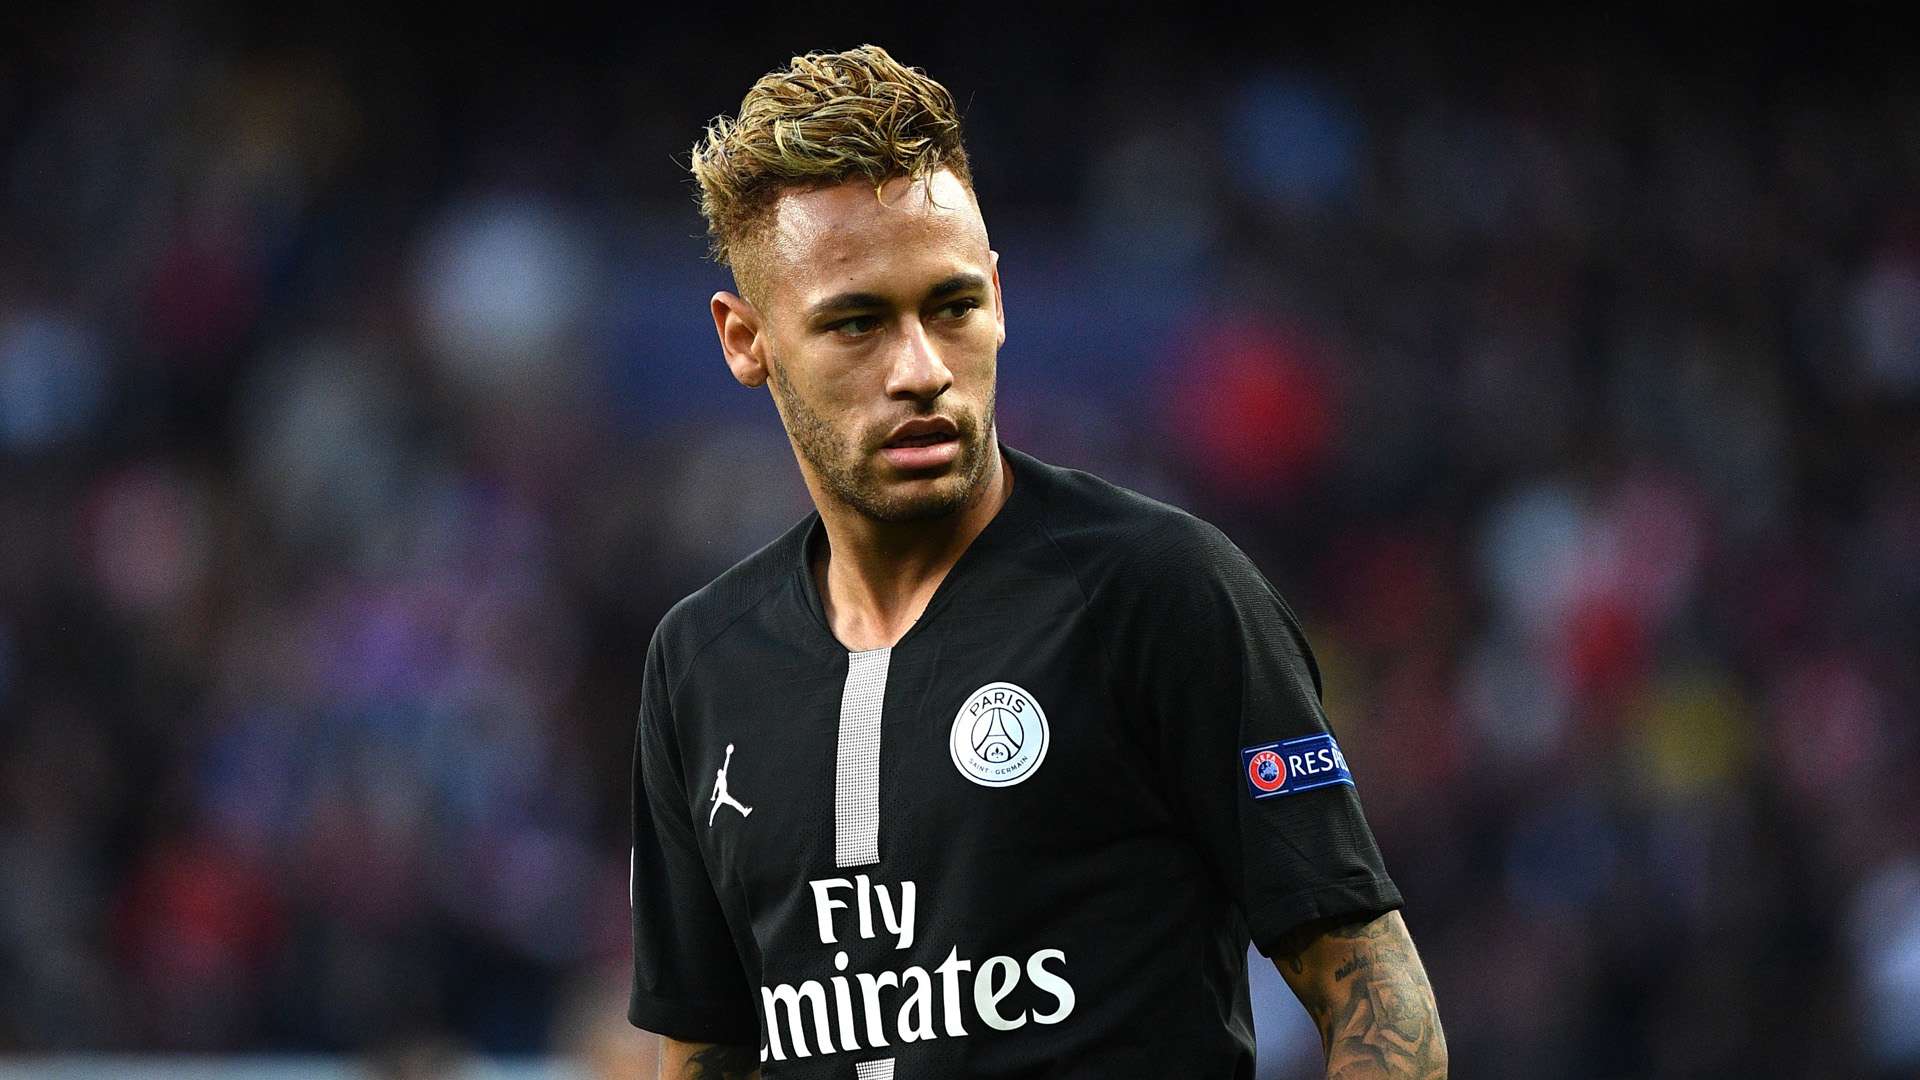 Neymar PSG Roter Stern CL 2018